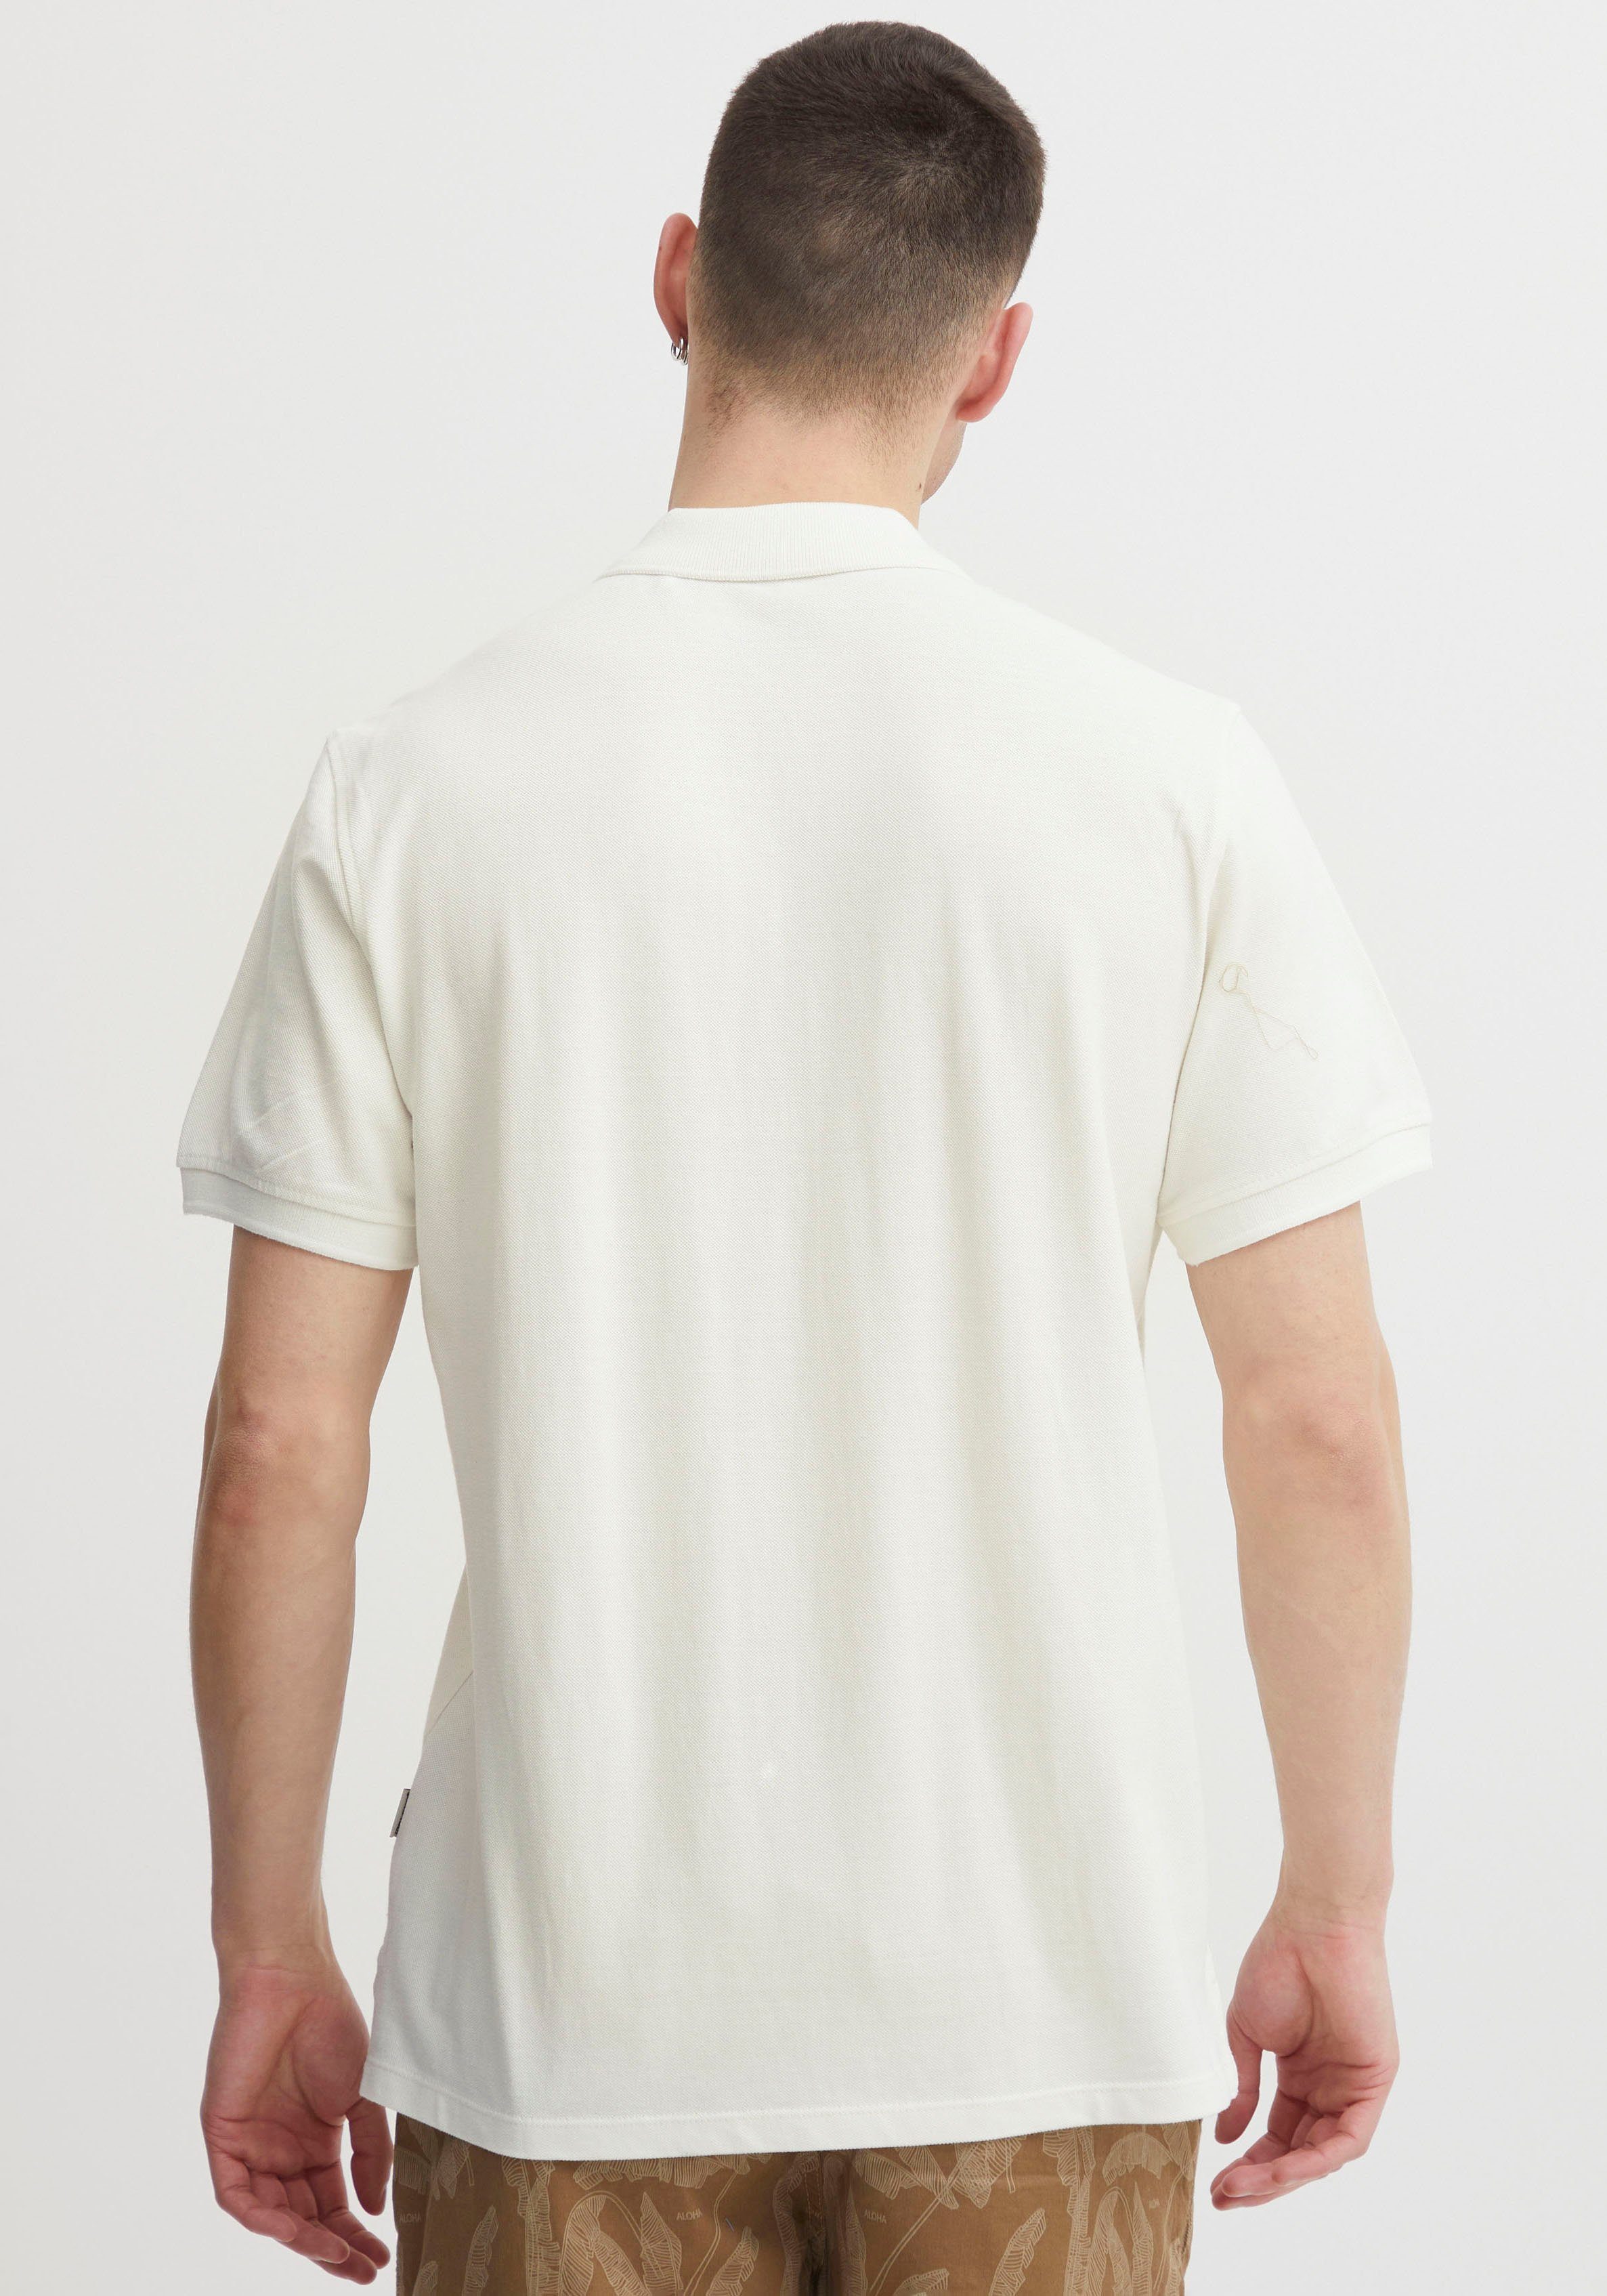 BL-Poloshirt white Blend Poloshirt